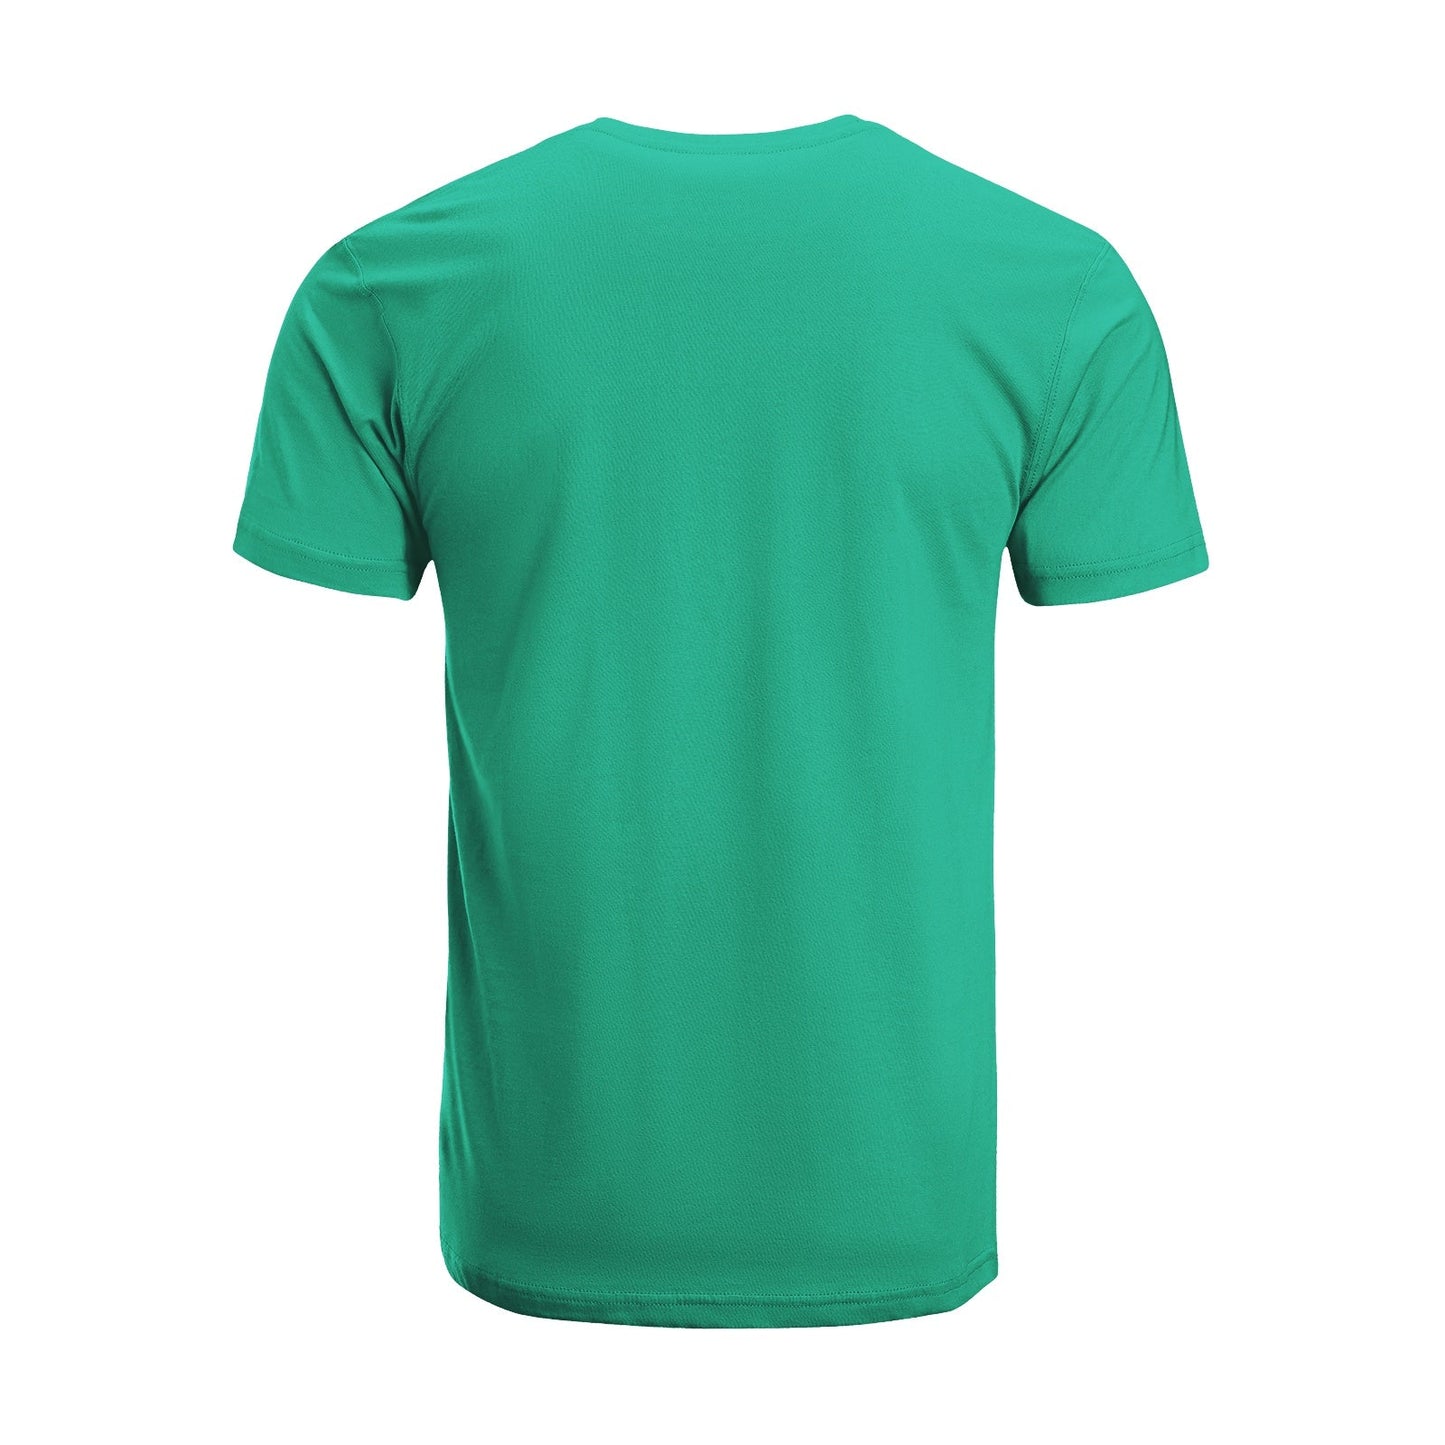 Unisex Short Sleeve Crew Neck Cotton Jersey T-Shirt VEGAN 08